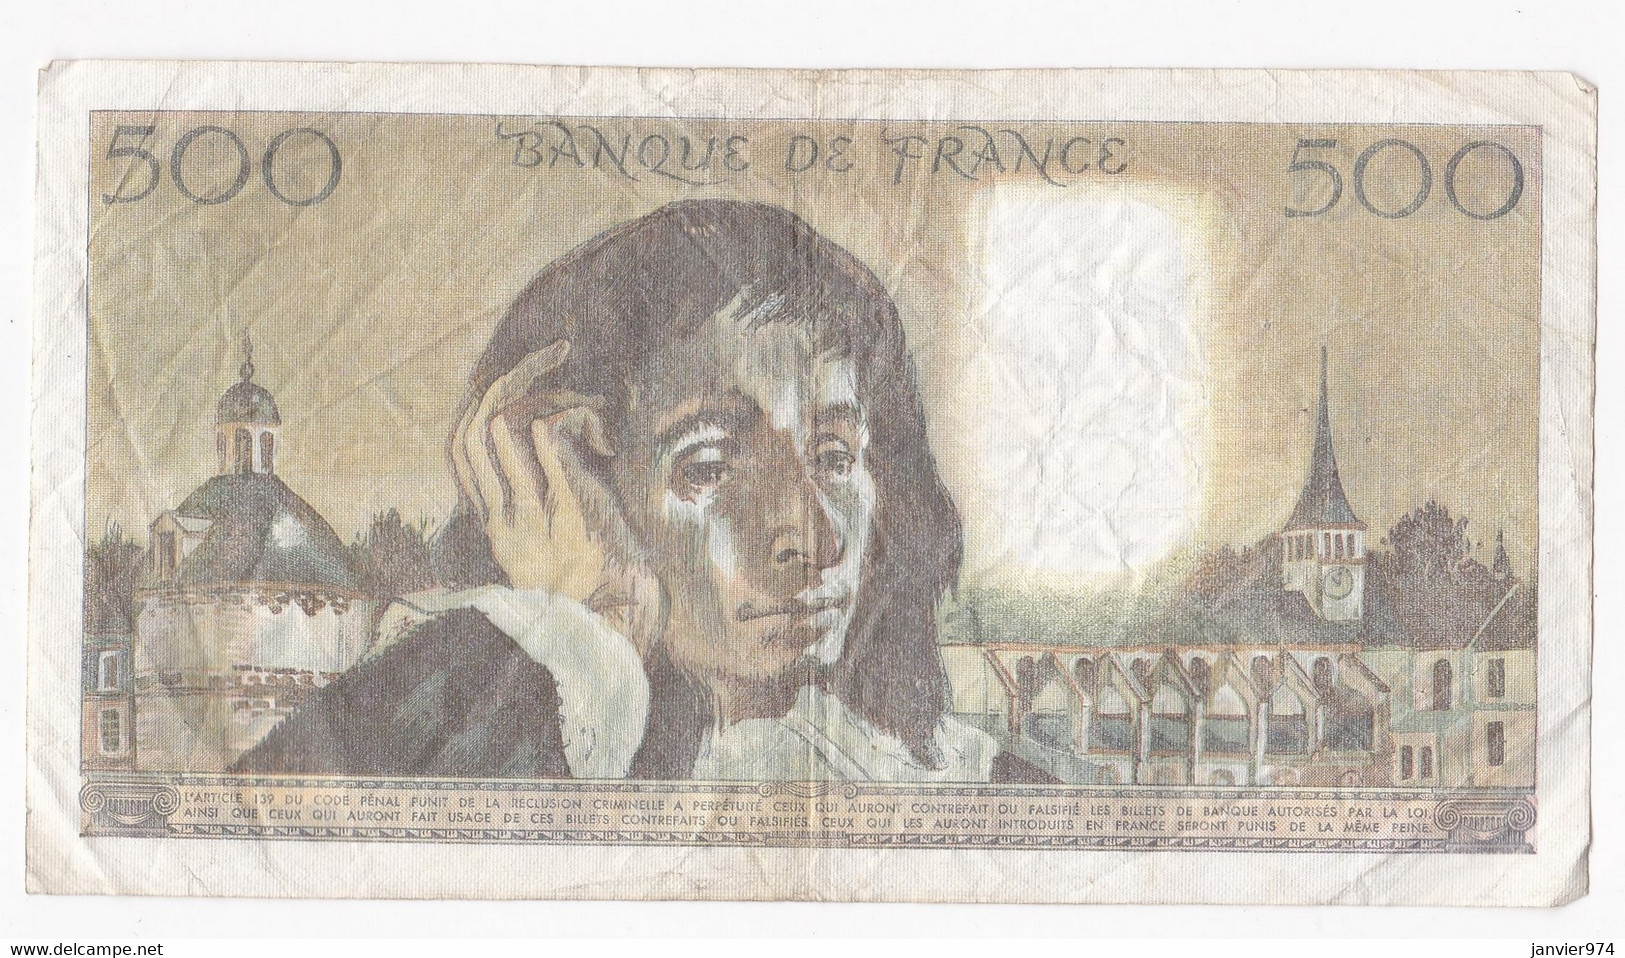 500 Francs Pascal 3 – 1 – 1985, Alph. H.221 N° 38997 - 500 F 1968-1993 ''Pascal''